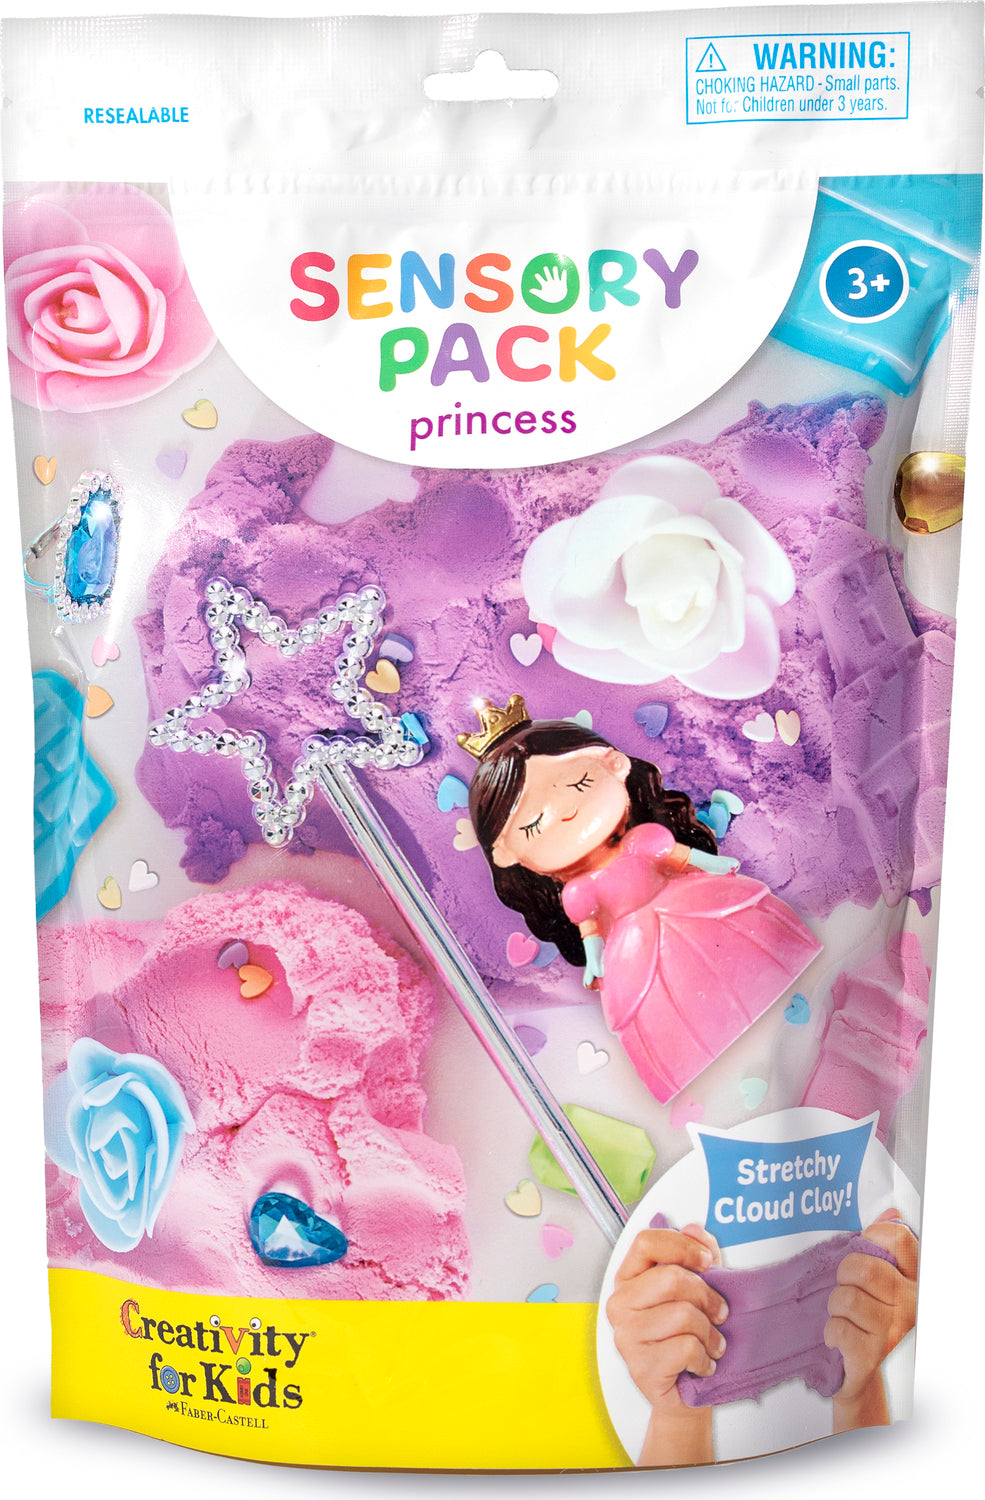 Sensory Pack Princess